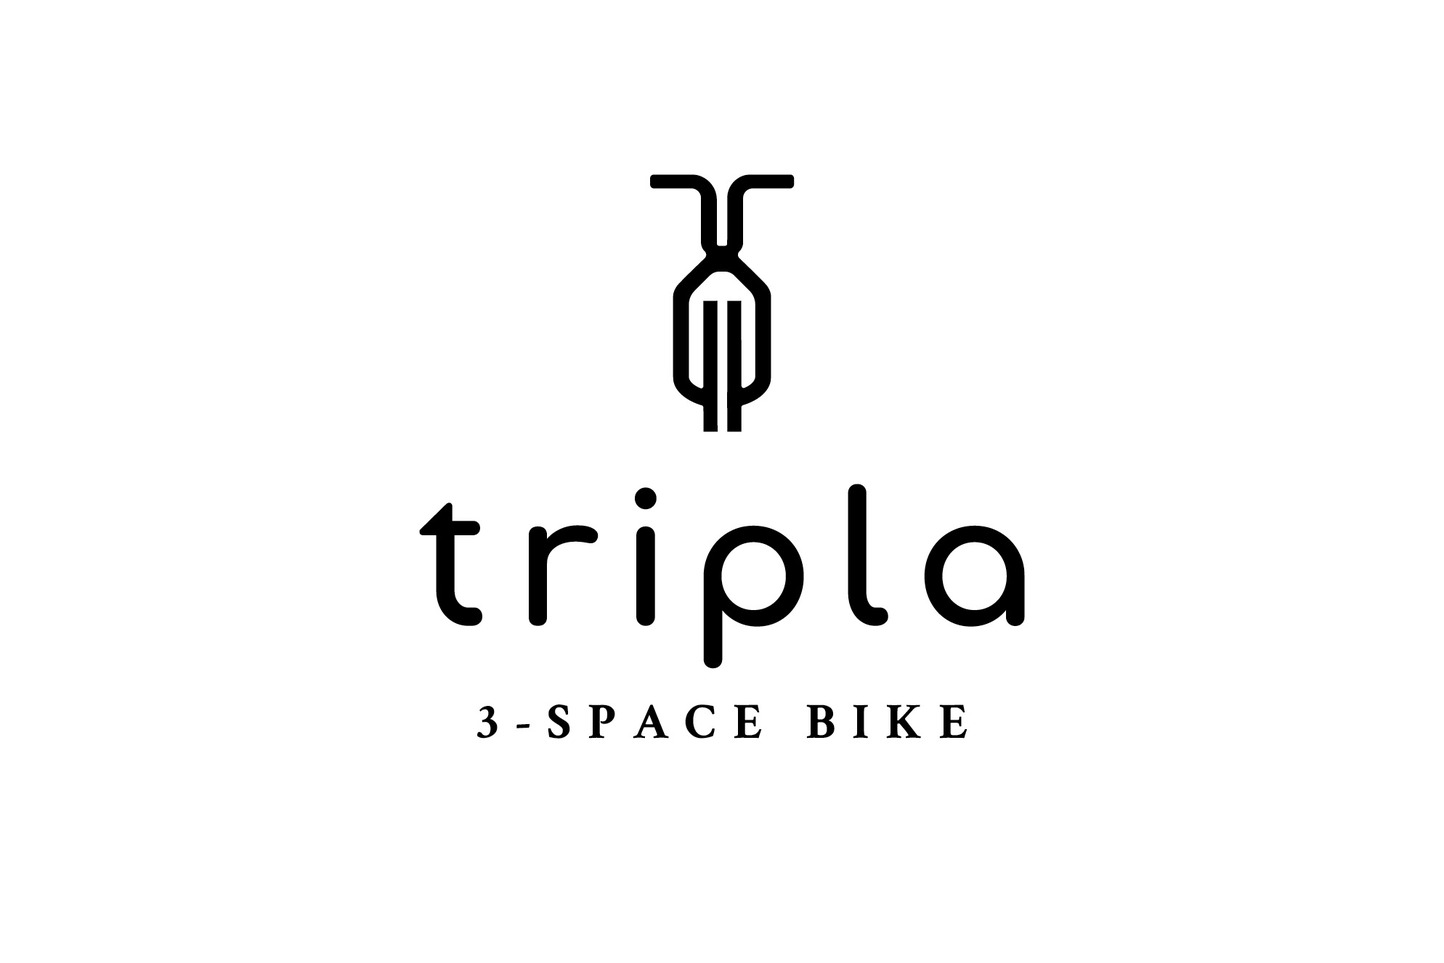 New brand
Tripla 3-Space Bike